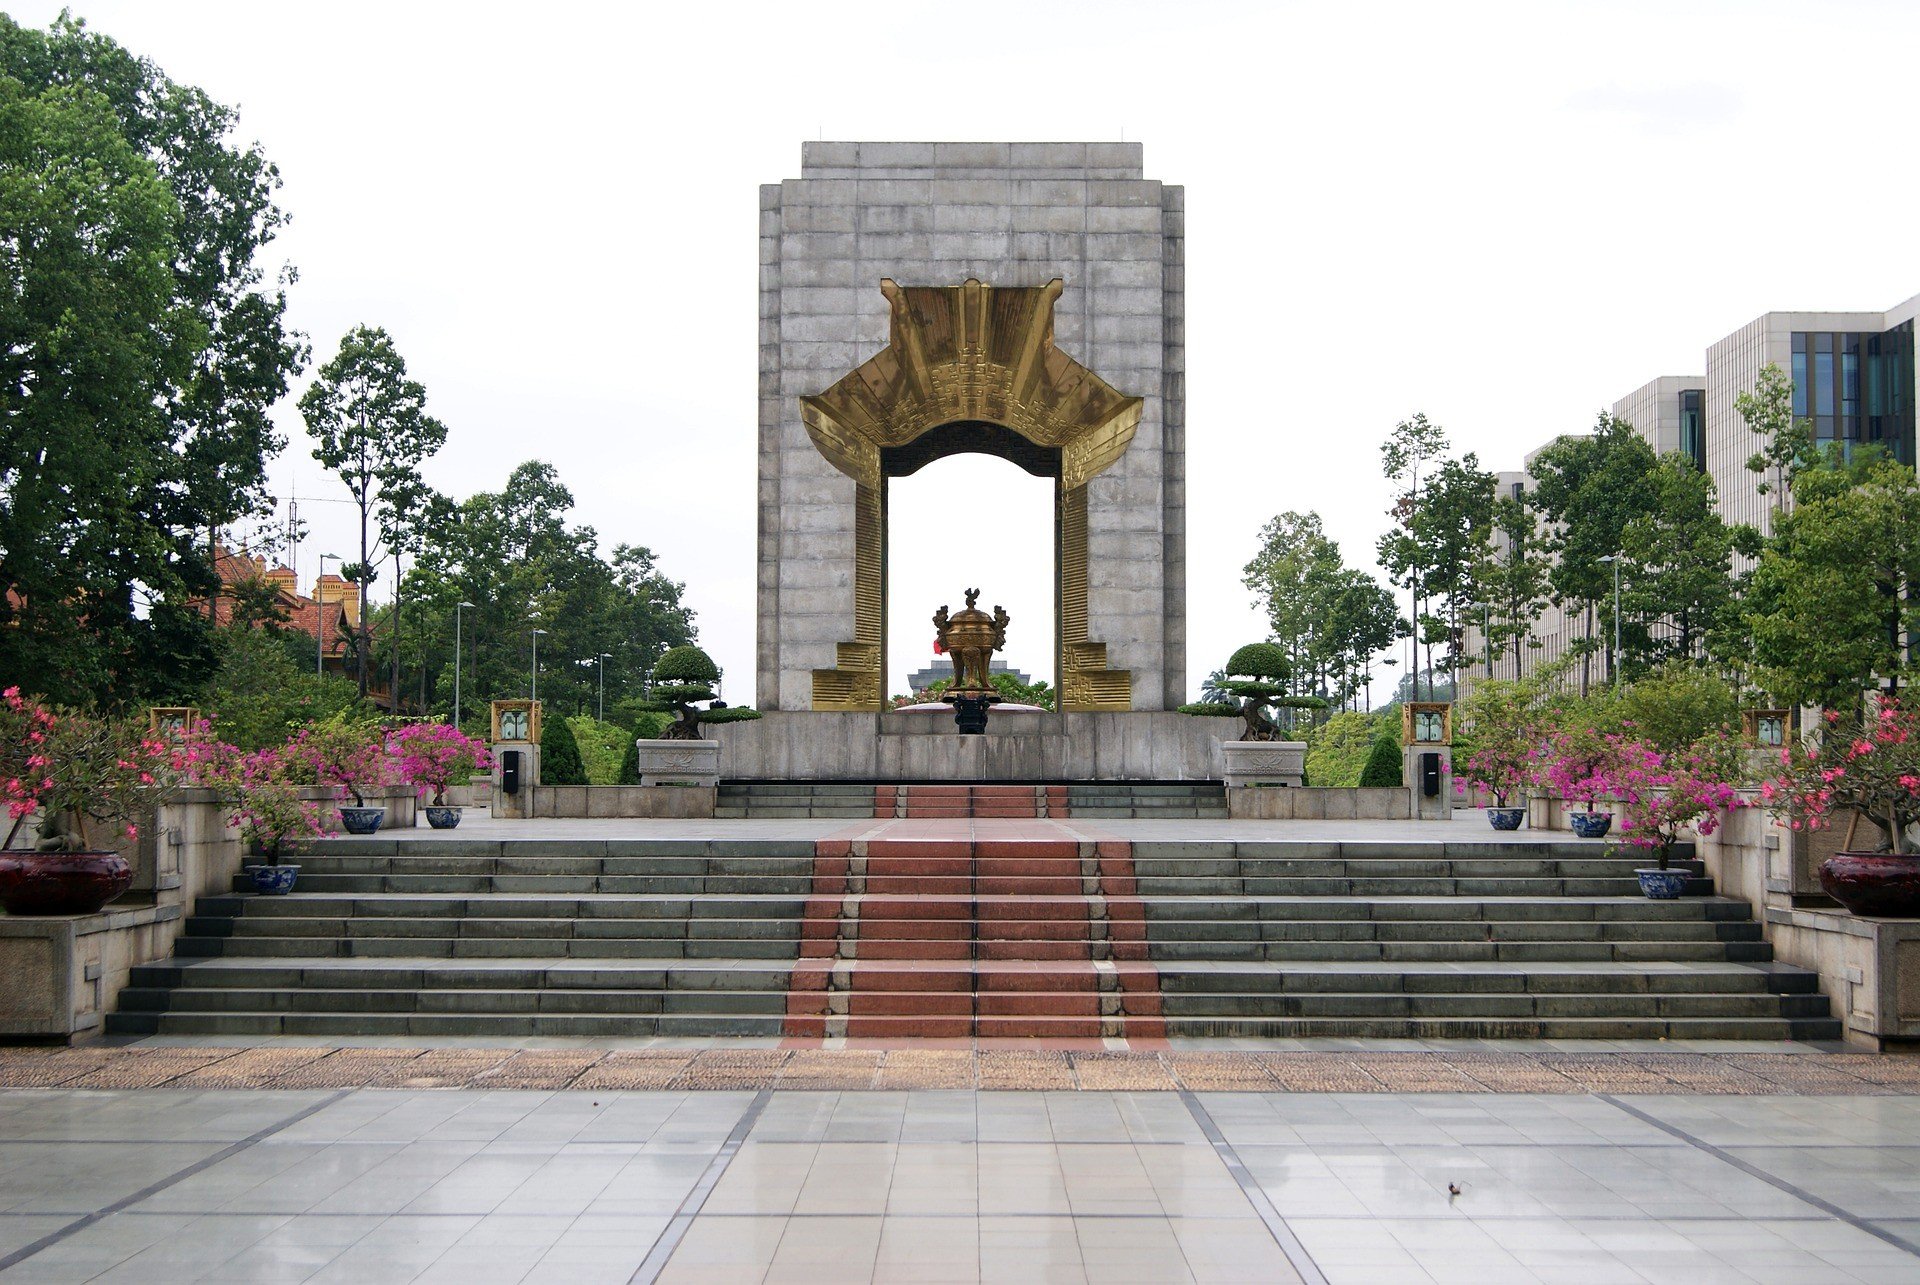 National monument of Vietnam - The Vietnam Veterans Memorial